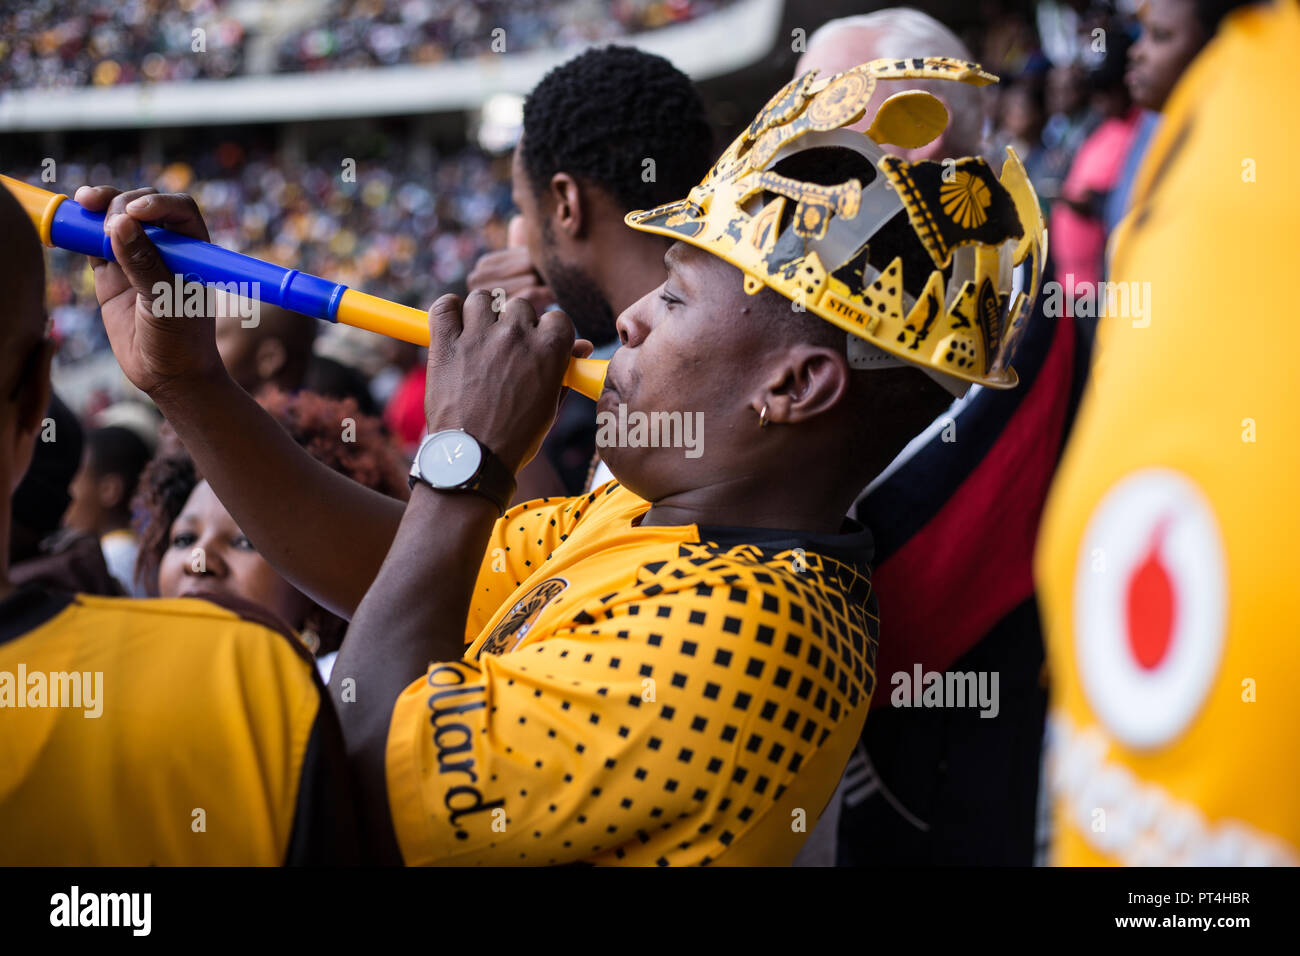 South African Football Fan Blowing a Vuvuzela, Cape Town, South